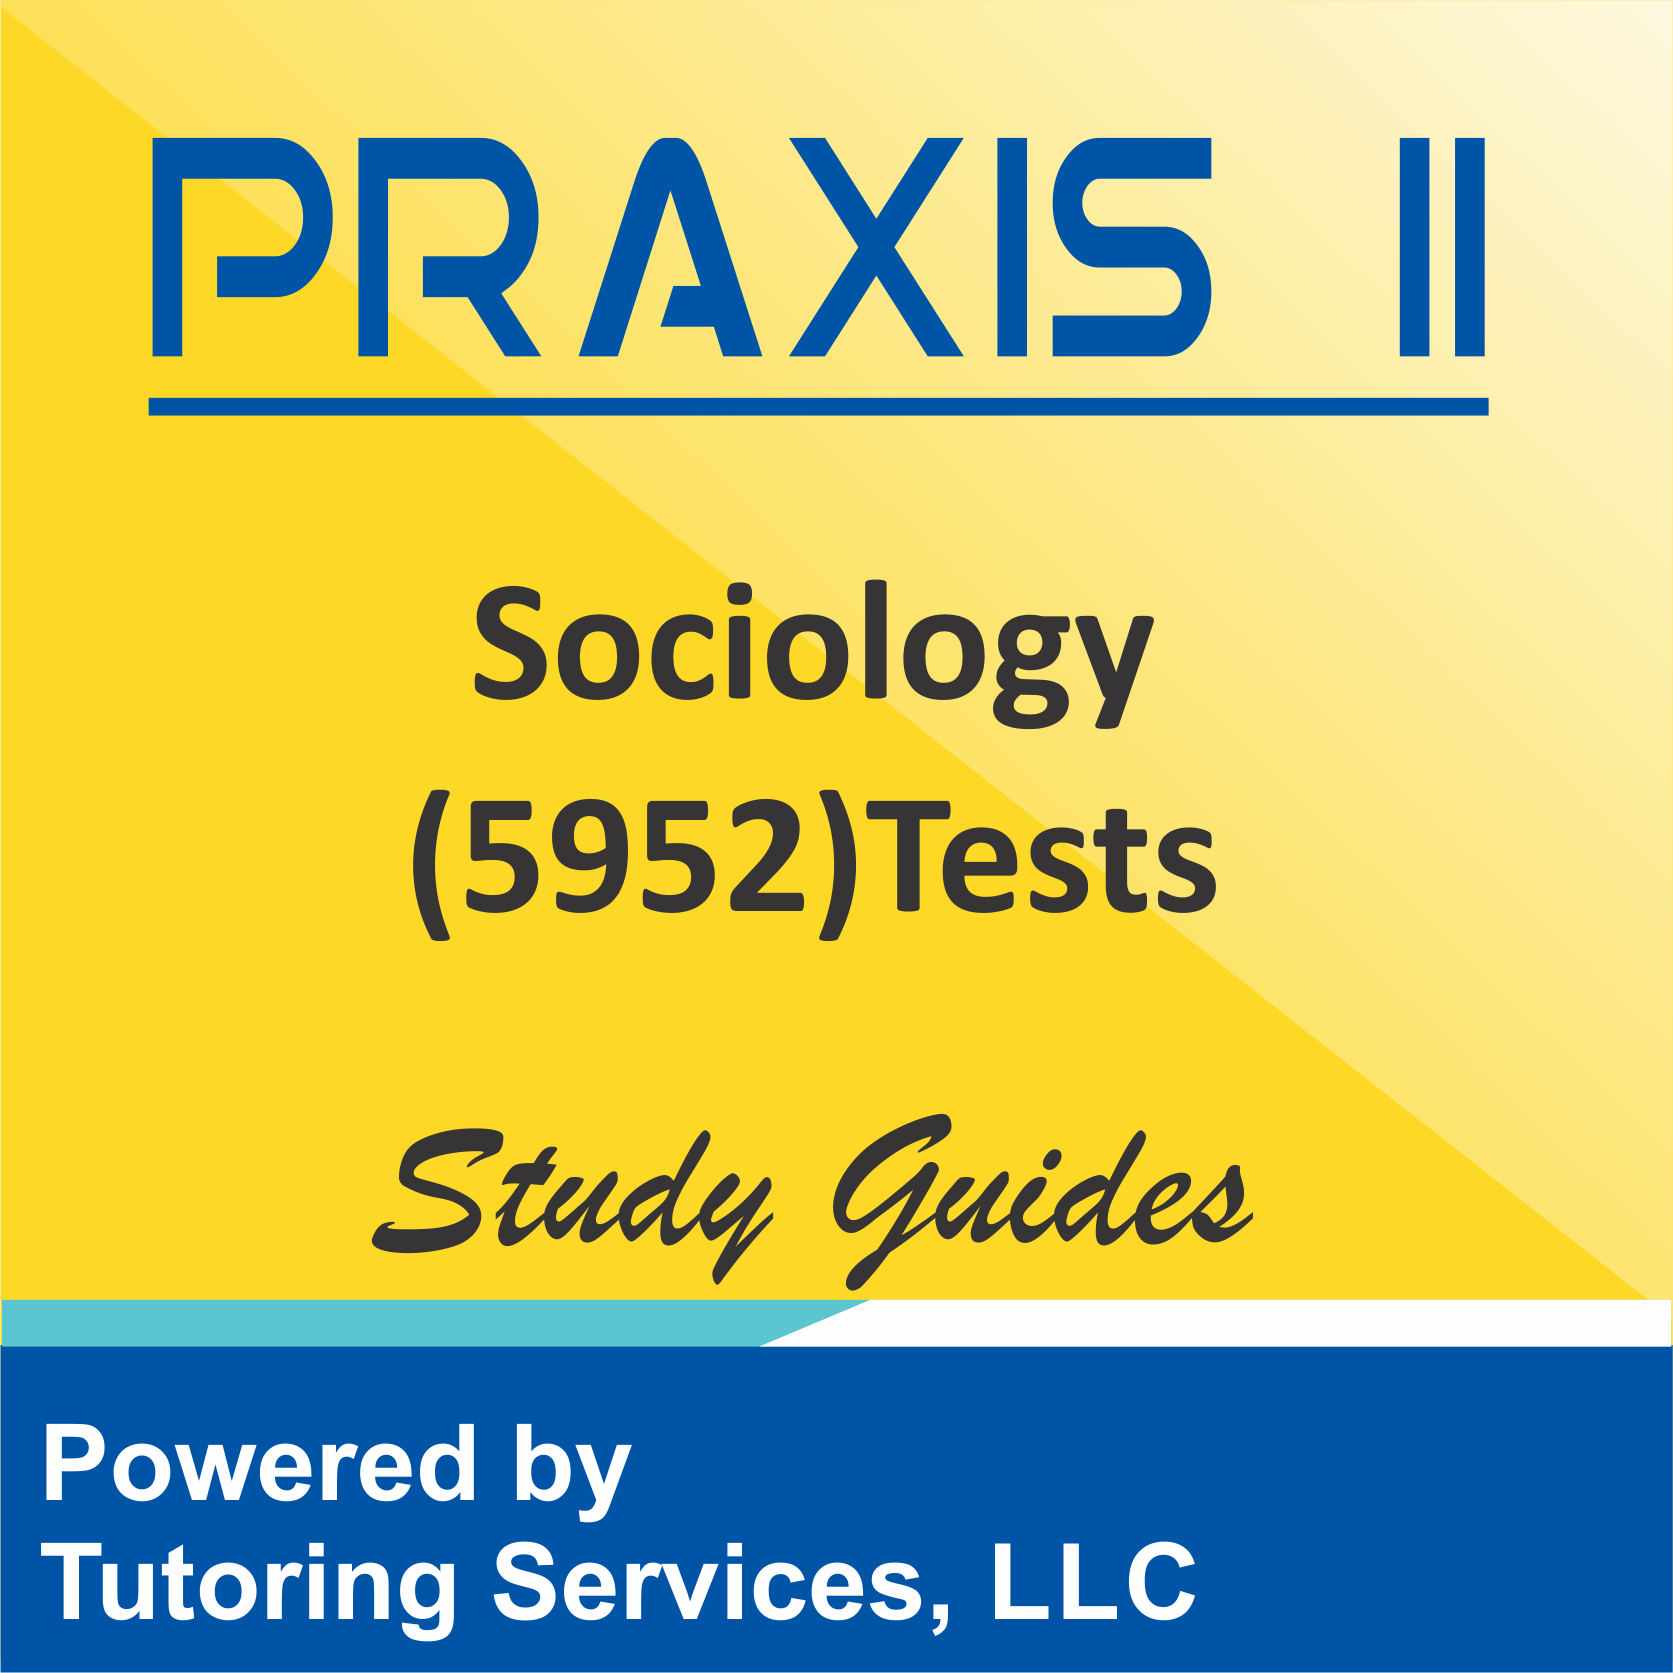 Praxis II Sociology (5952) Test Format